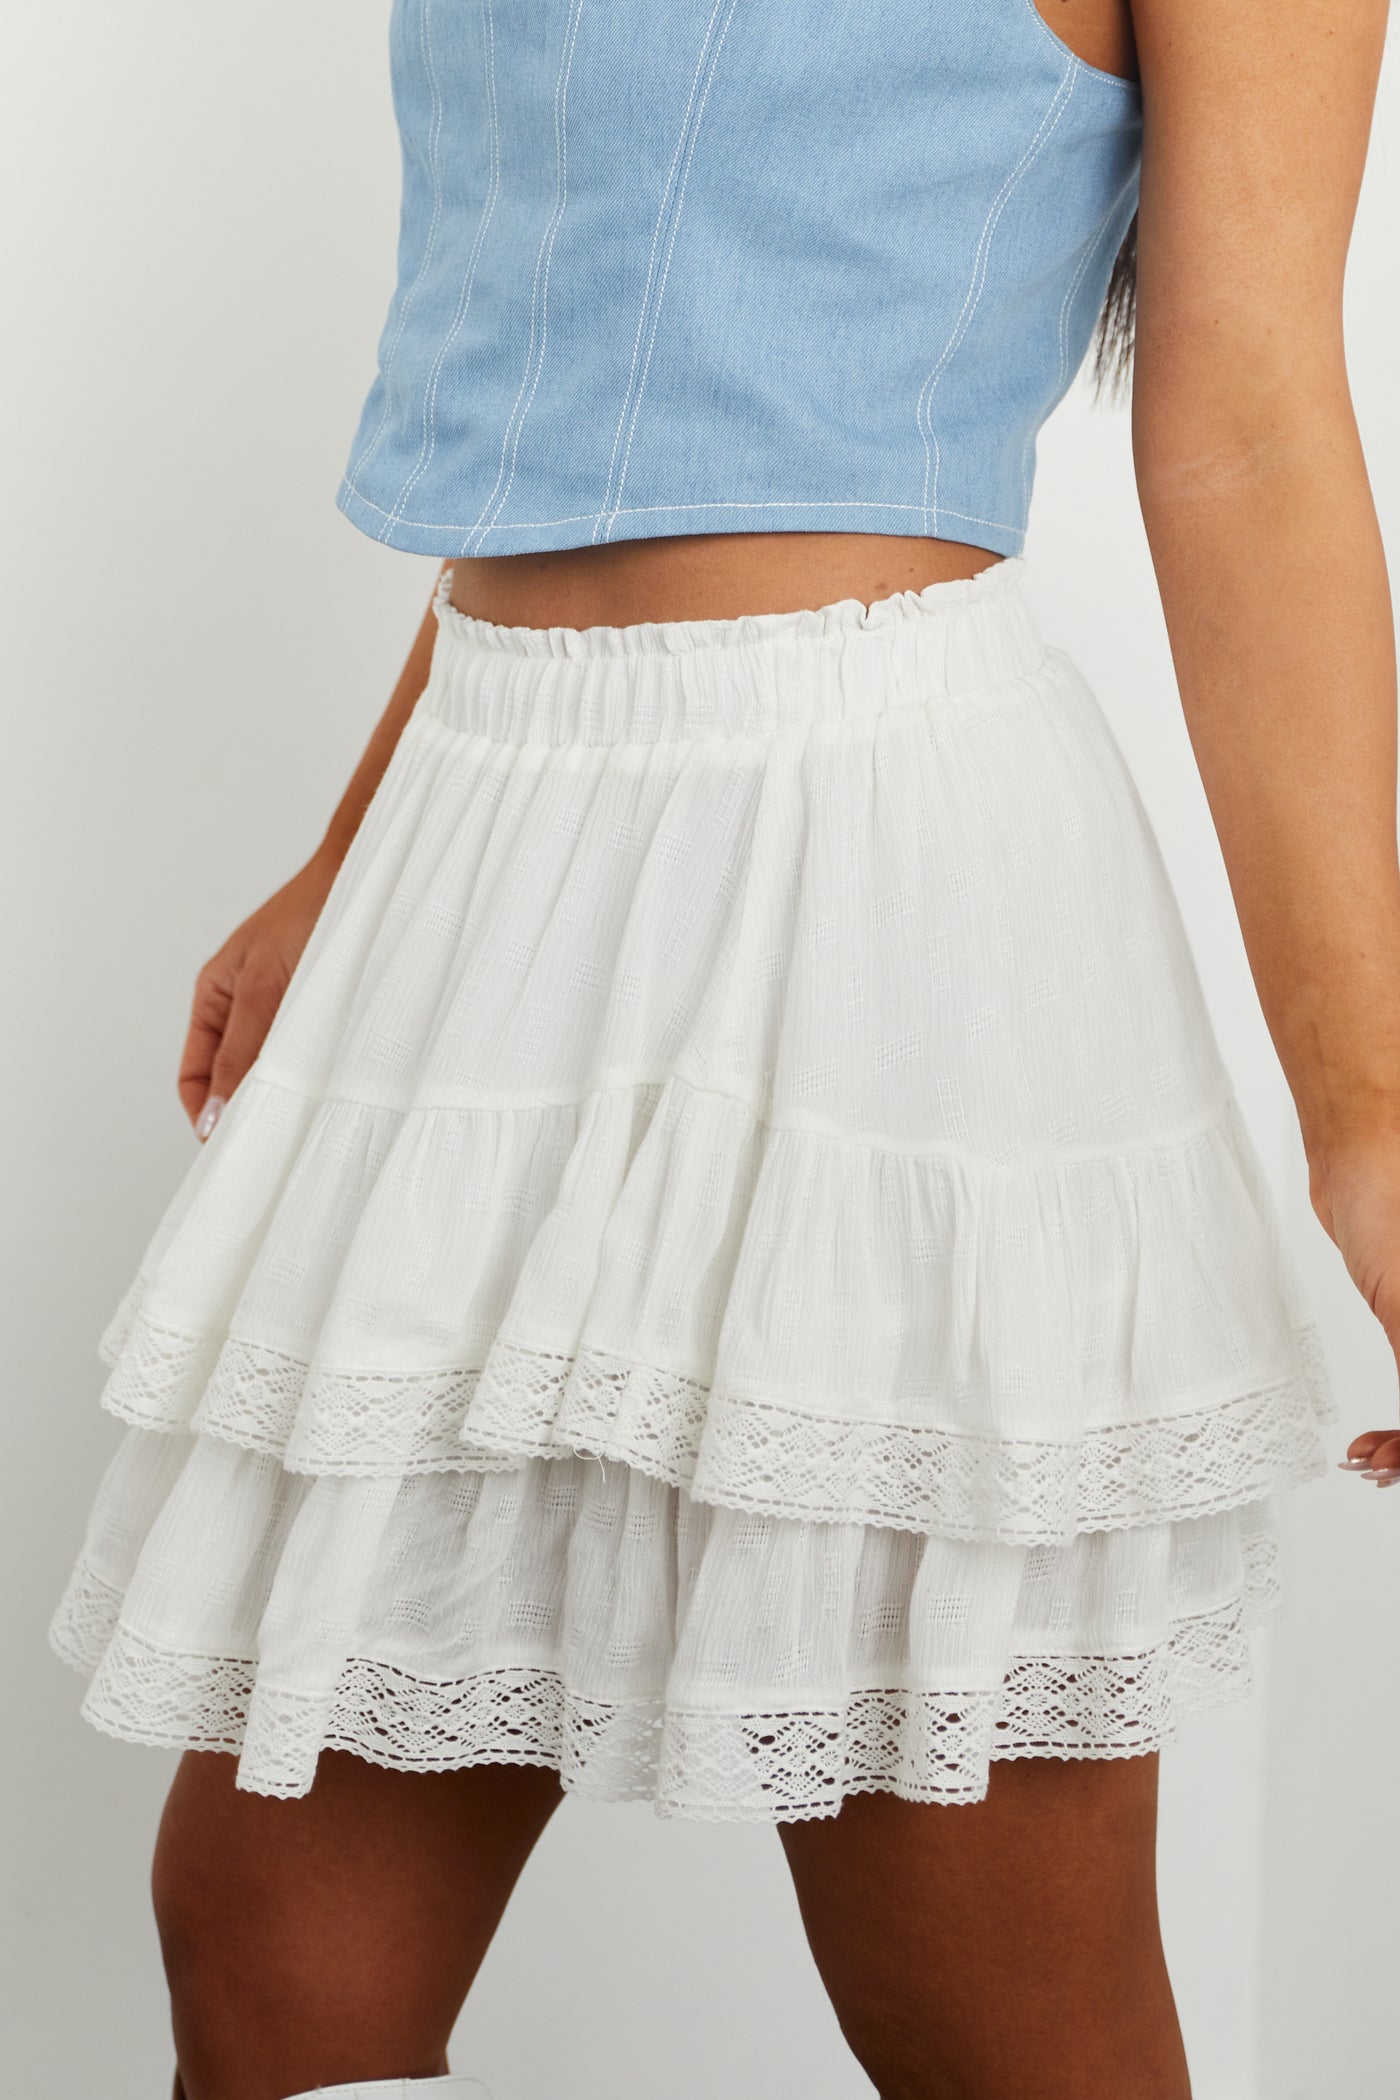 Off White Lace Trim Ruffle Overlay Mini Skirt